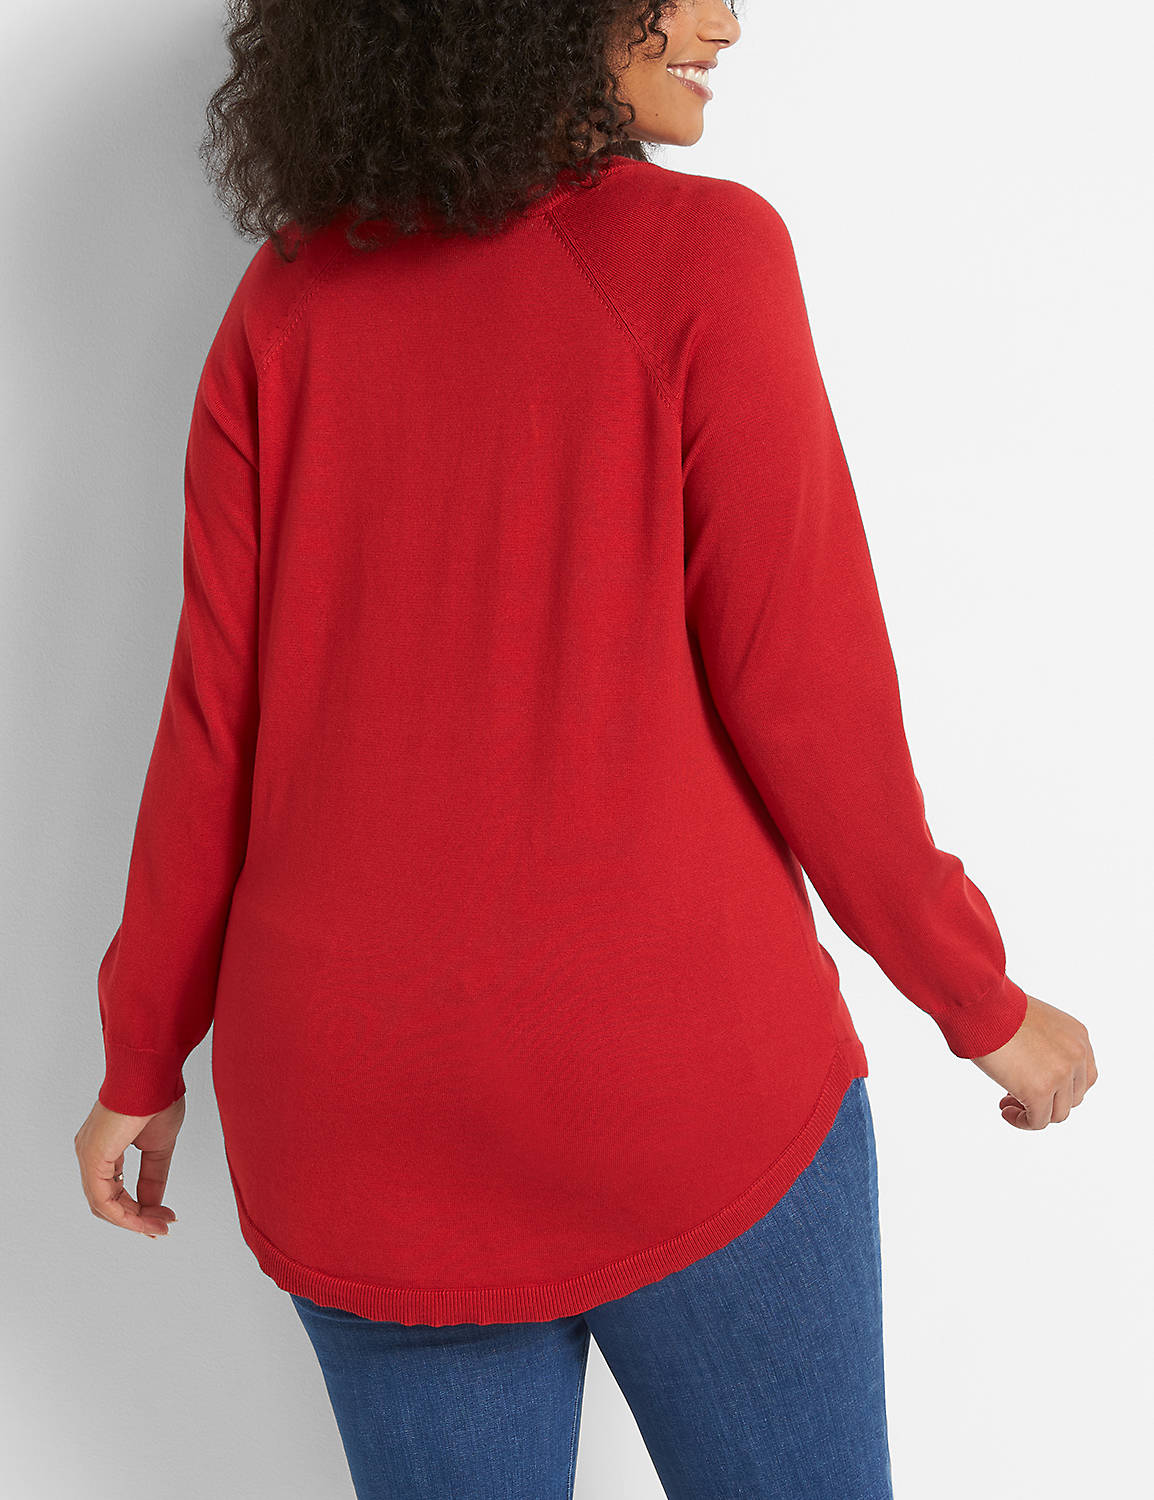 V-Neck Curved-Hem Sweater Product Image 2